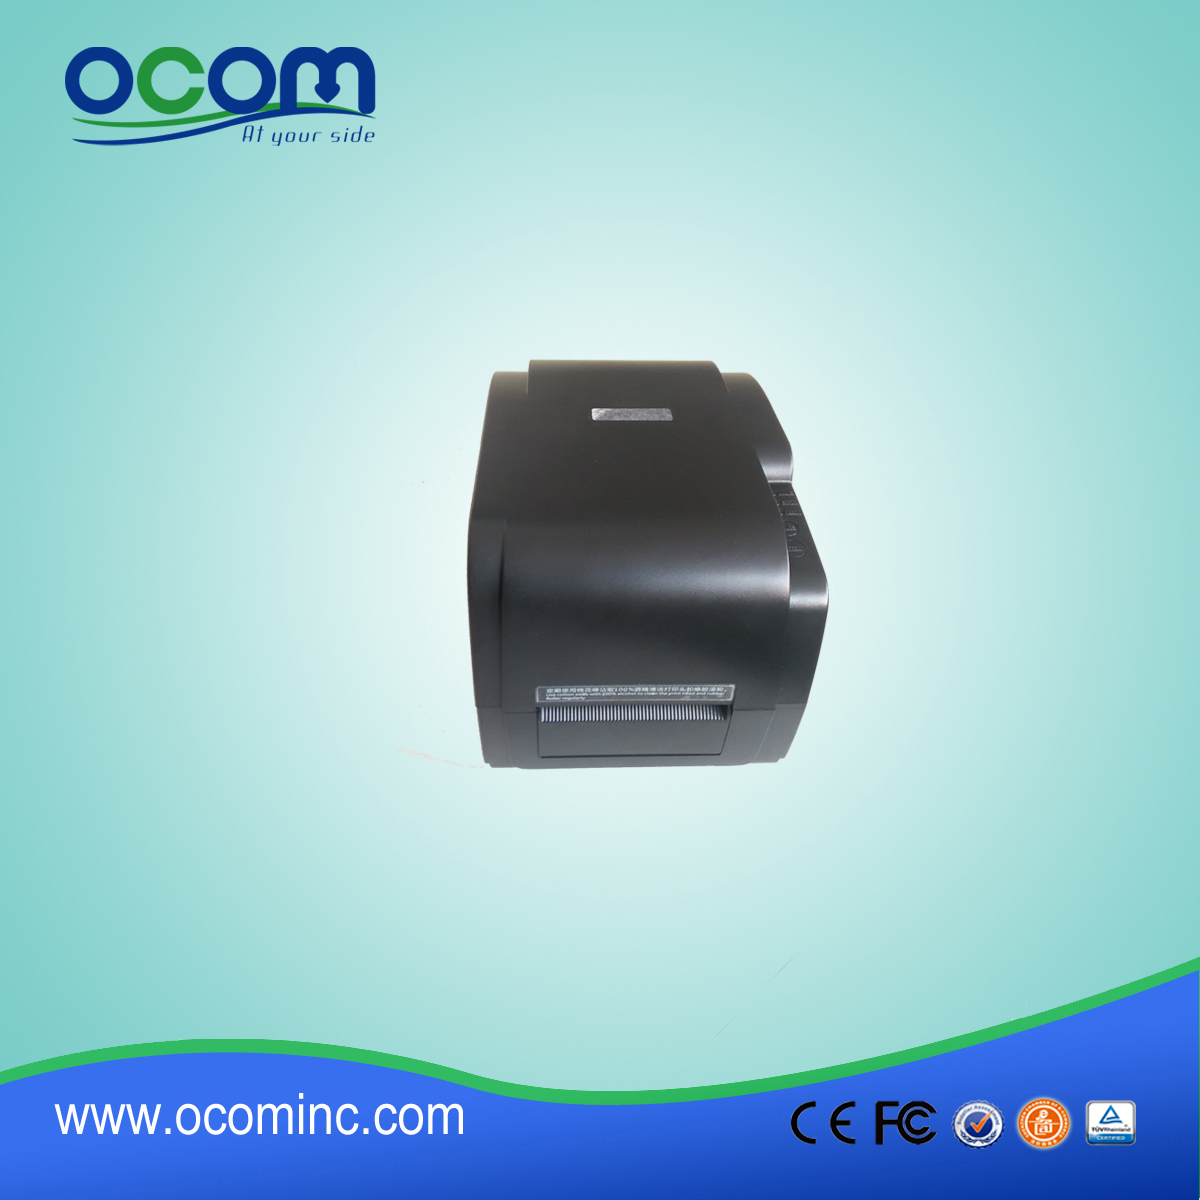 Thermal Transfer et Direct Barcode thermique Label Printer (Modèle No .: OCBP-003)